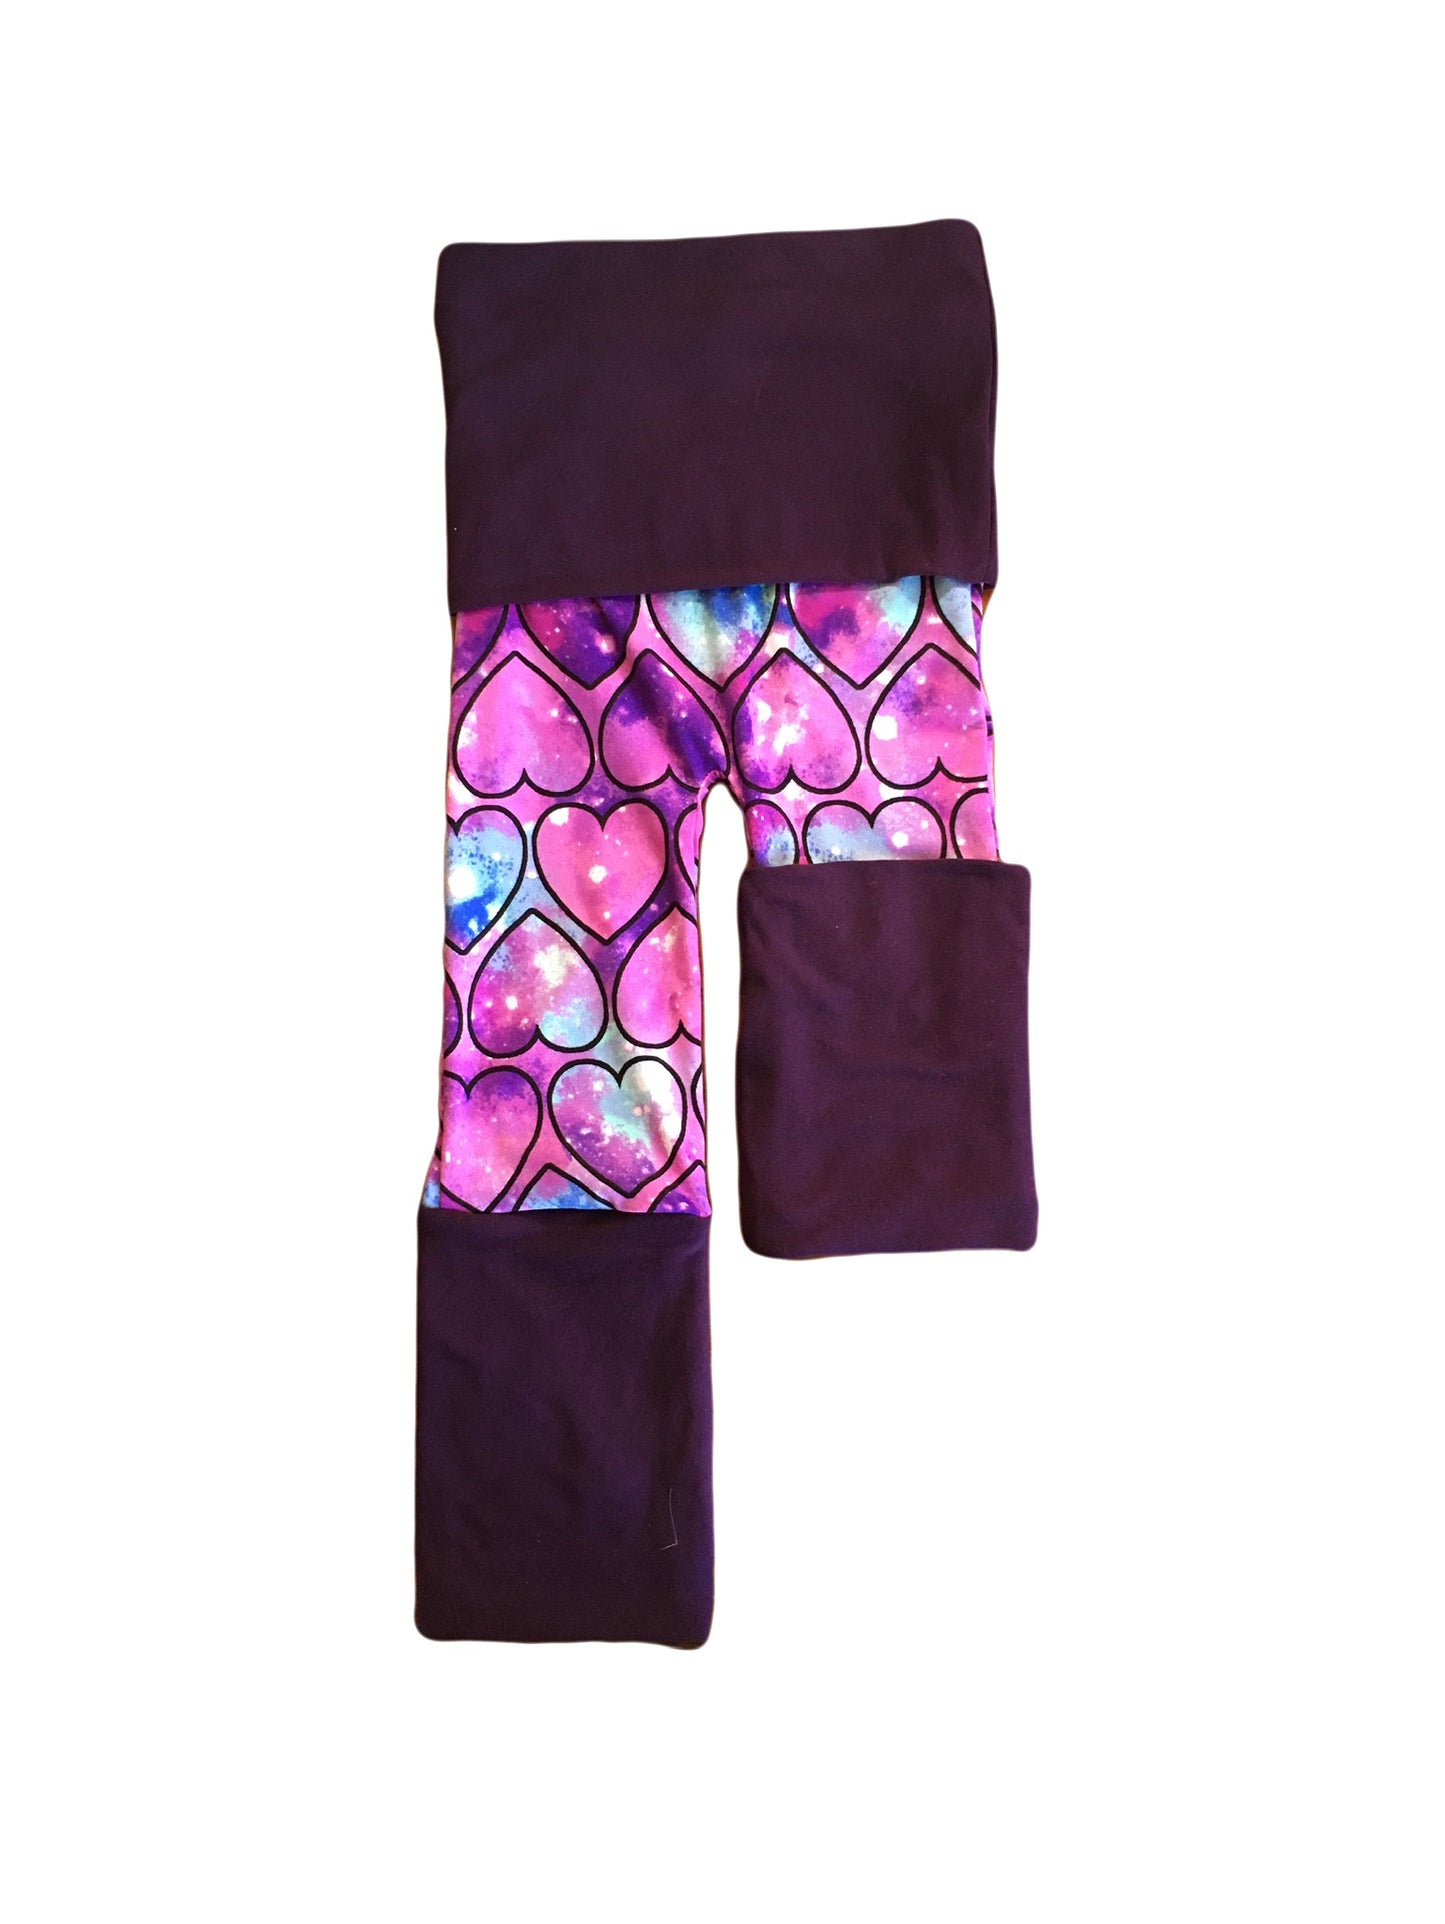 Adjustable Pants - Tie-Dye Hearts with Purple